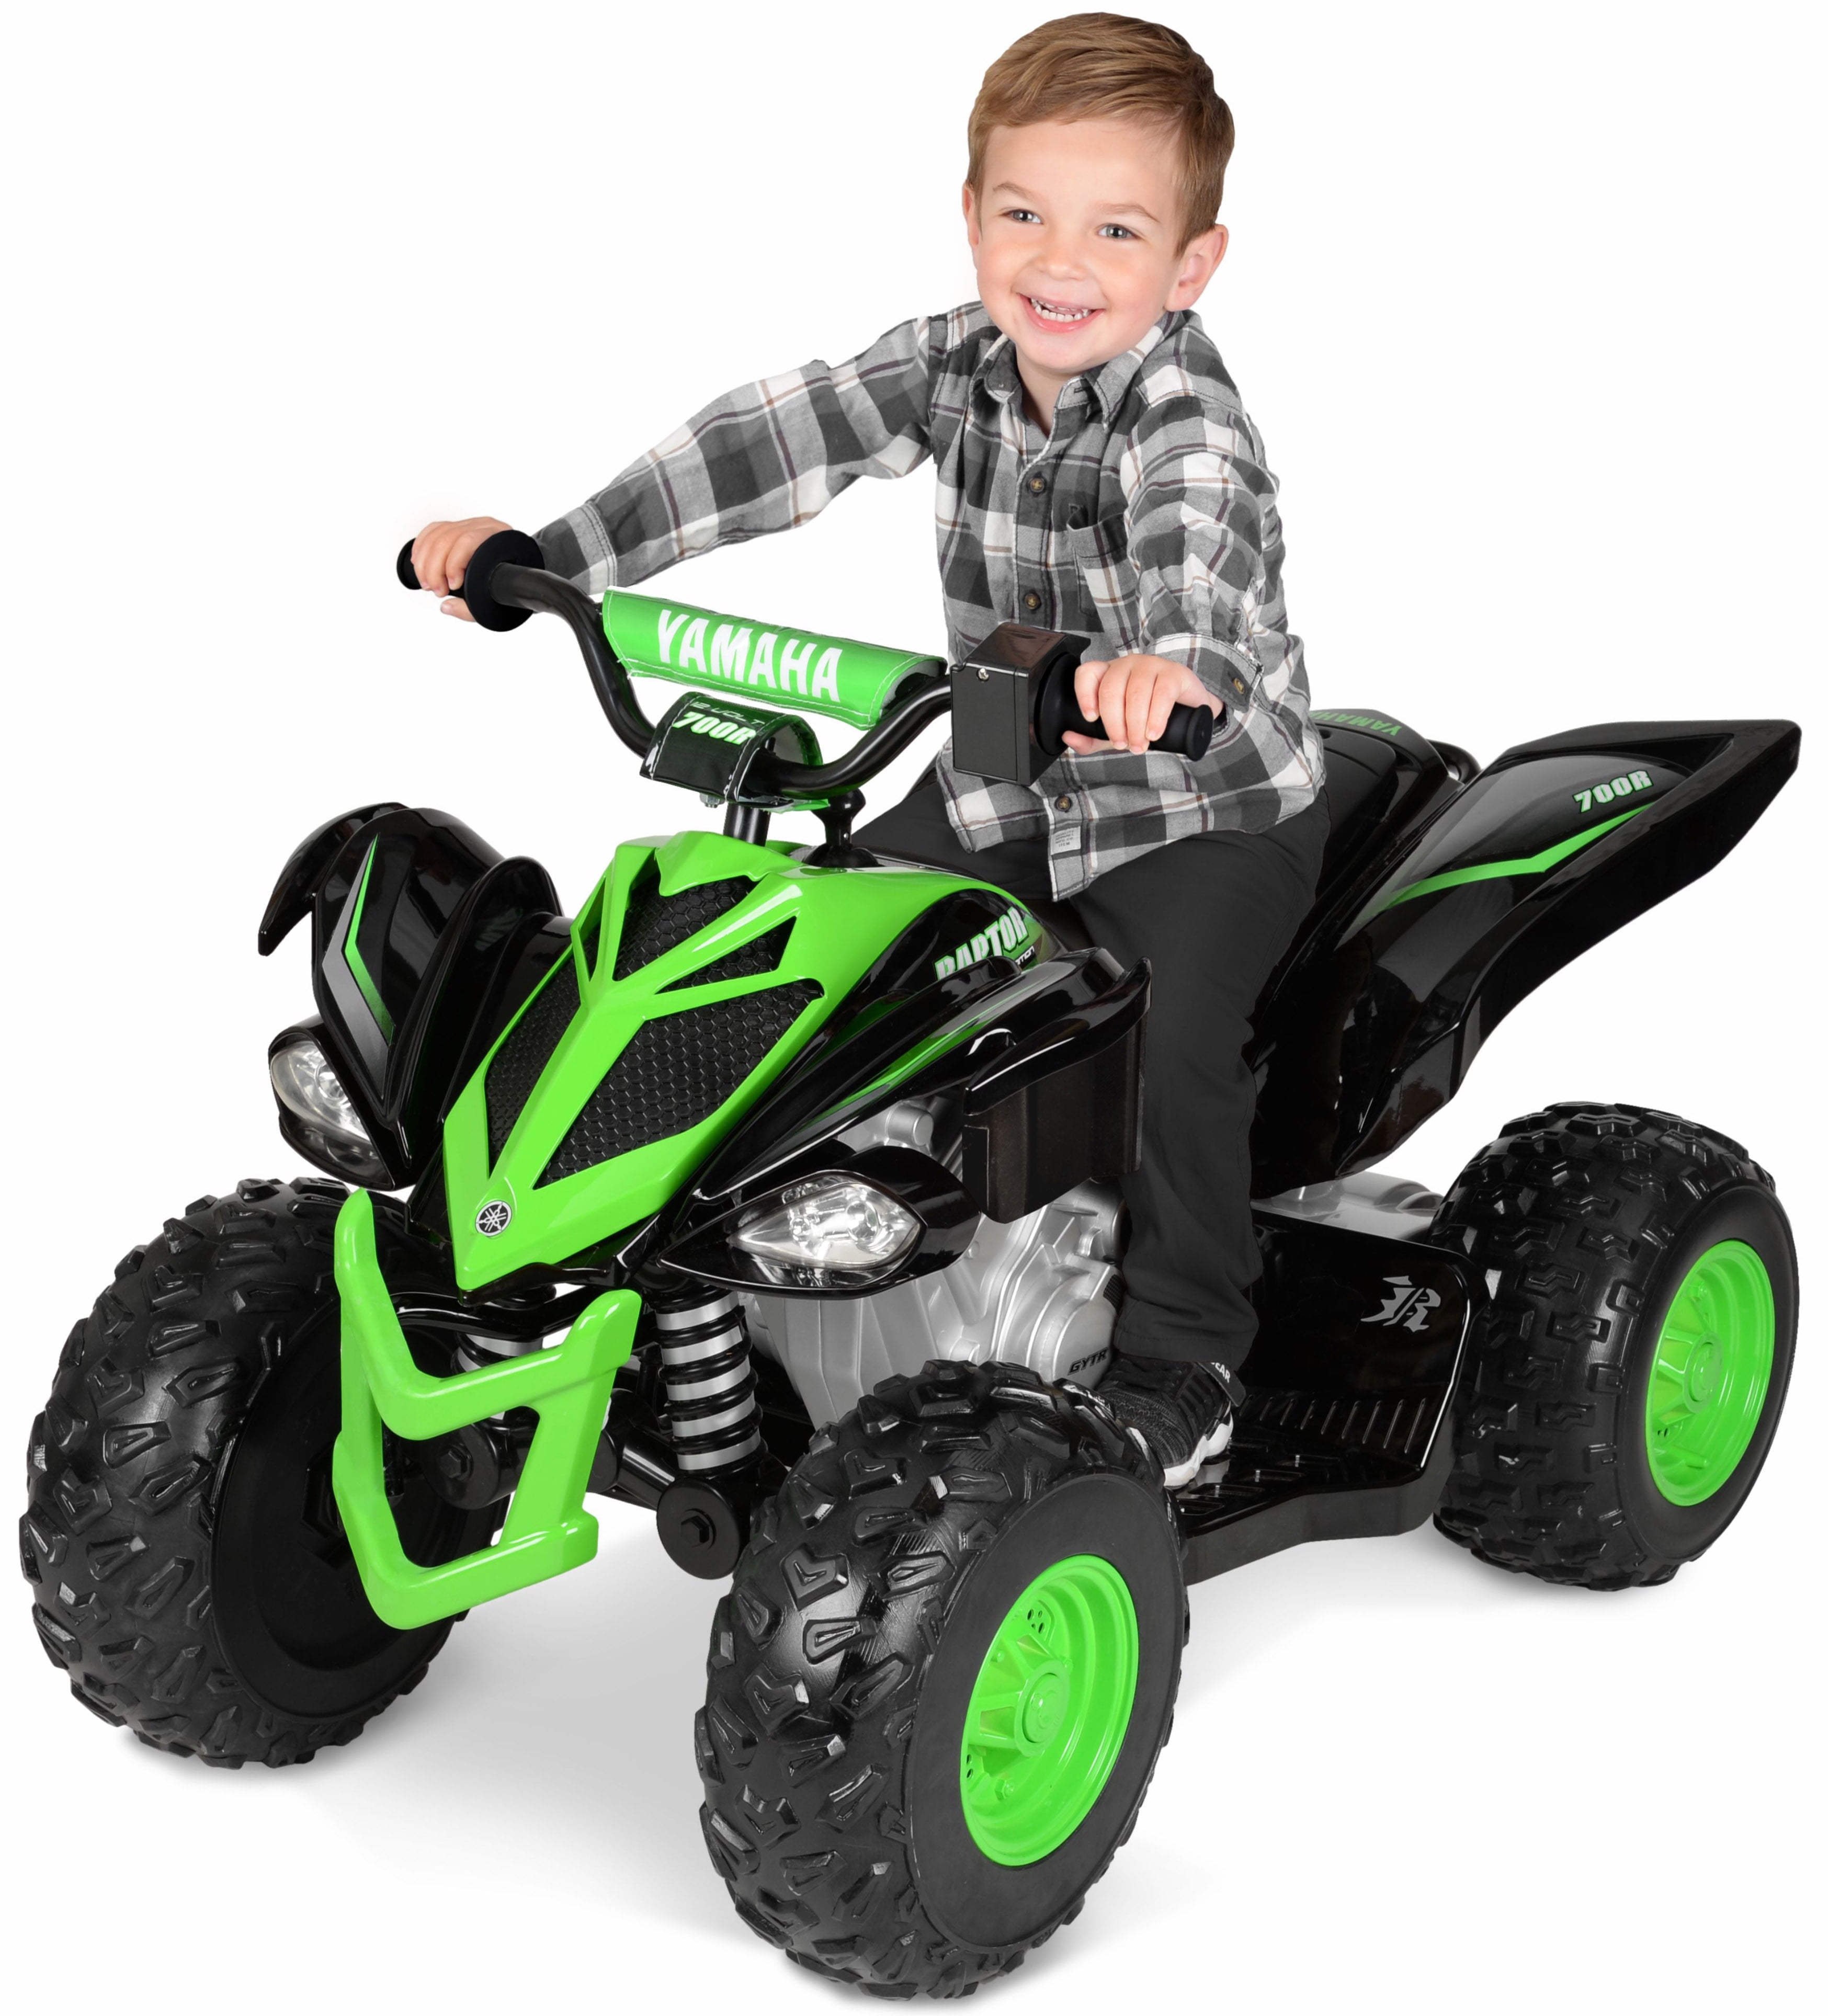 EC1708 for sale online Yamaha Raptor ATV 12V Battery-Powered Ride-On Toy 